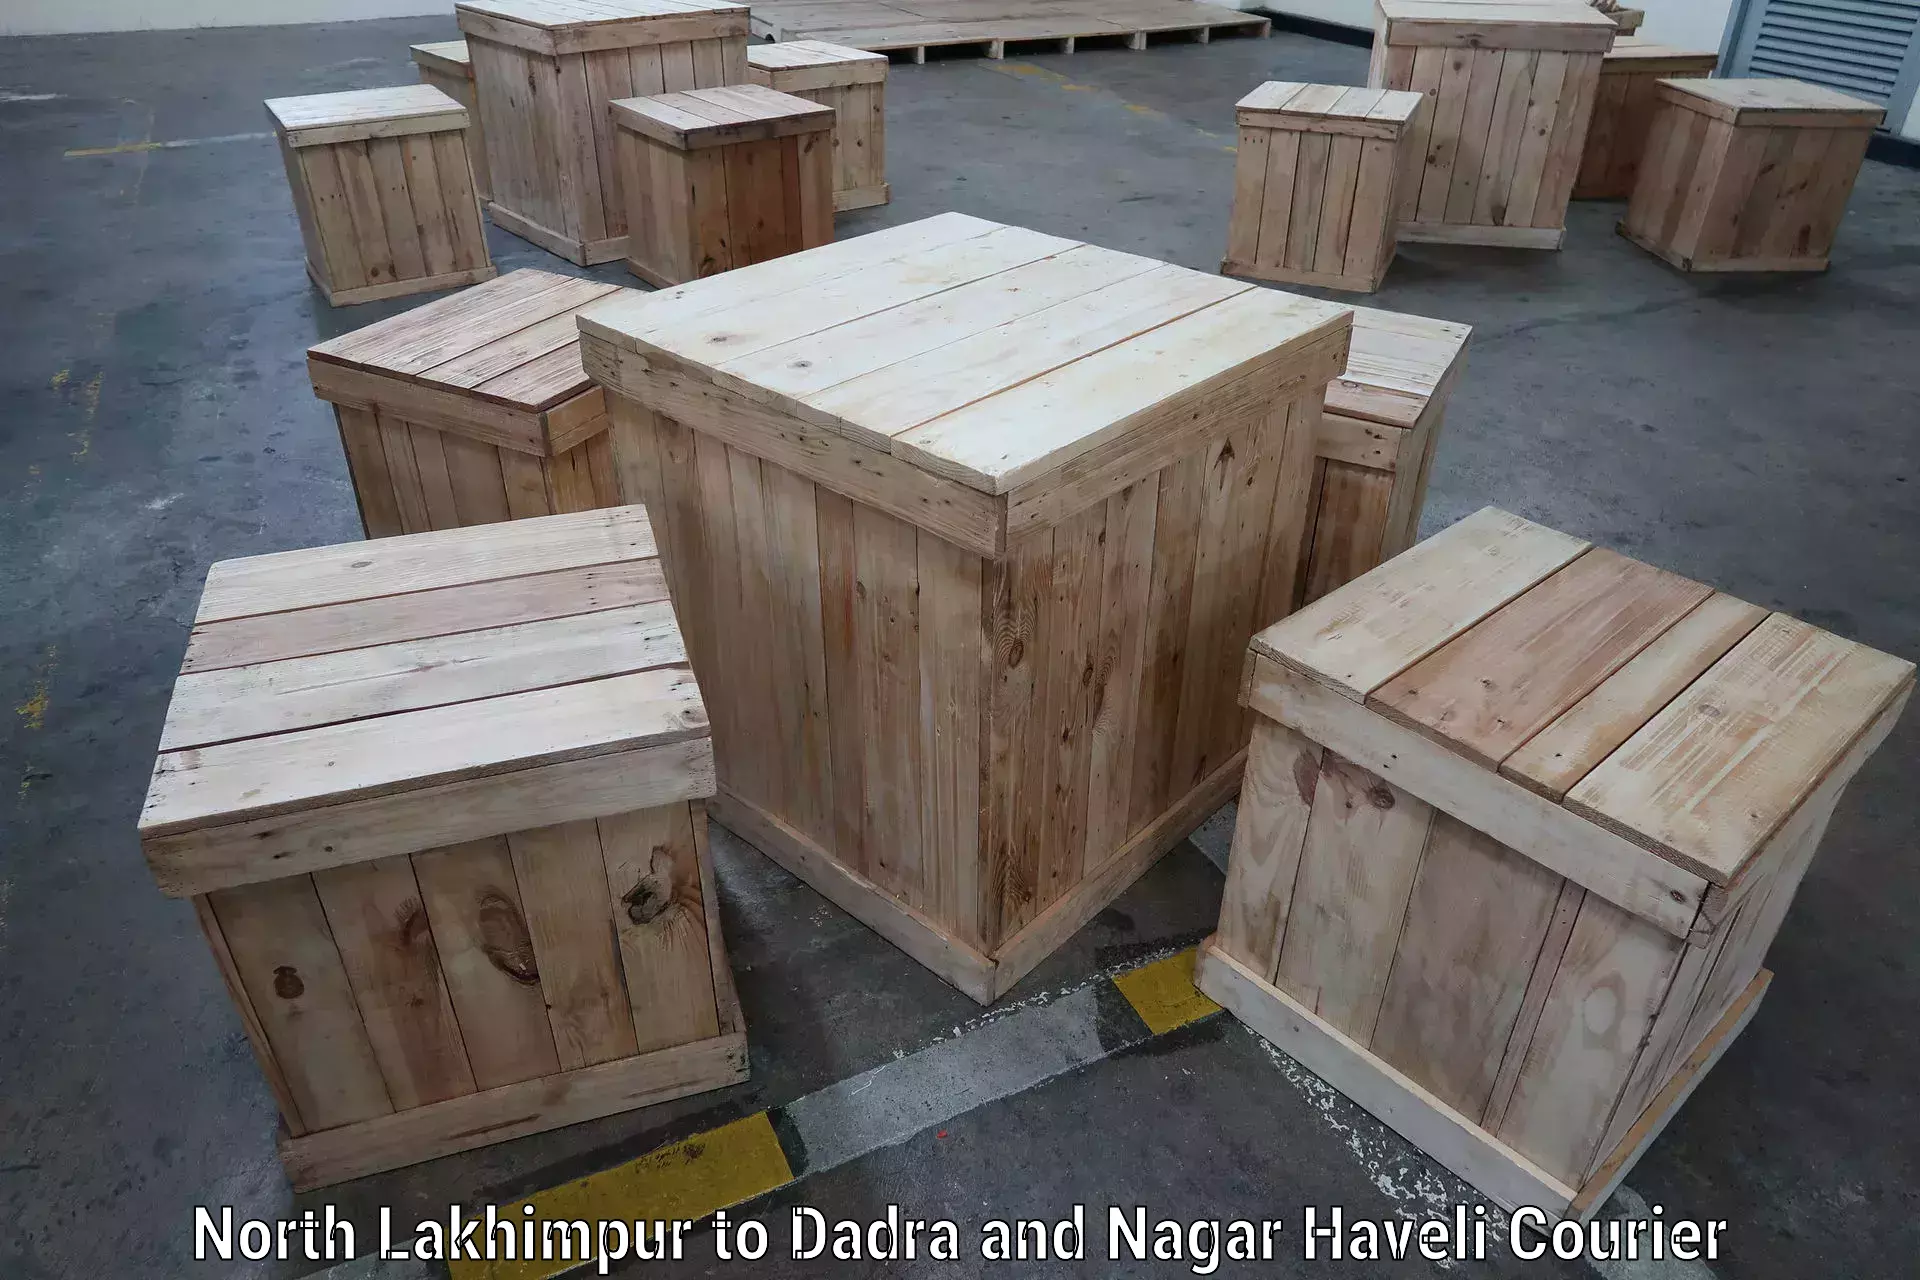 Courier service partnerships North Lakhimpur to Dadra and Nagar Haveli